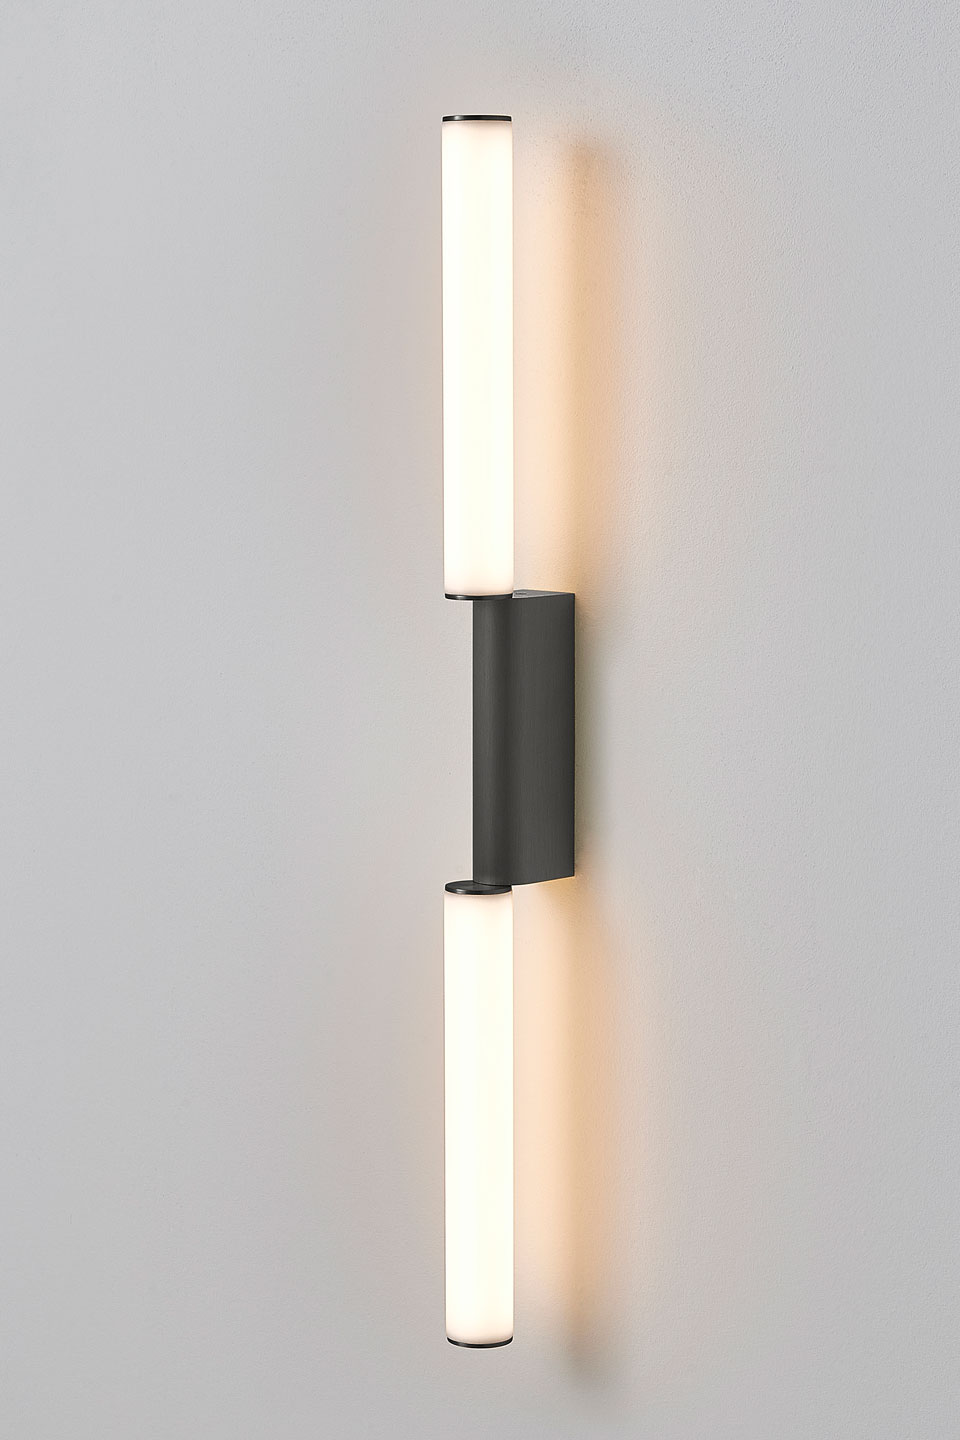 Signal 720 double neon retro-contemporary black wall light. CVL Luminaires. 